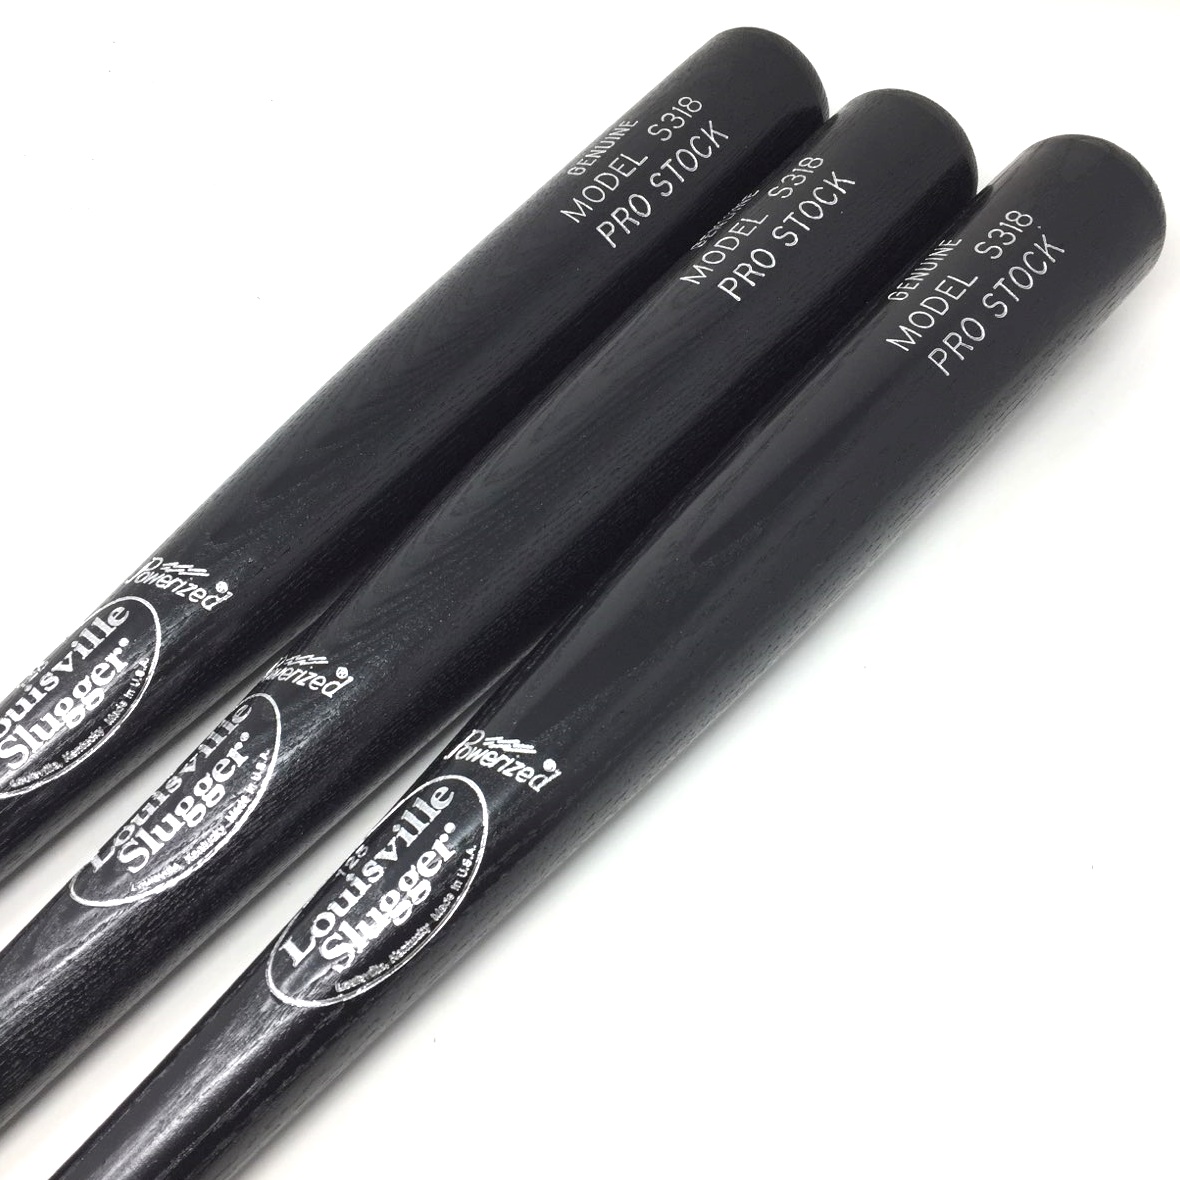 wood-baseball-bat-pack-33-inch-3-bats-s318-pro-stock BATPACK-0019  Does not apply 3 pack of S318 Pro Stock Louisville Slugger Wood Baseball Bats.